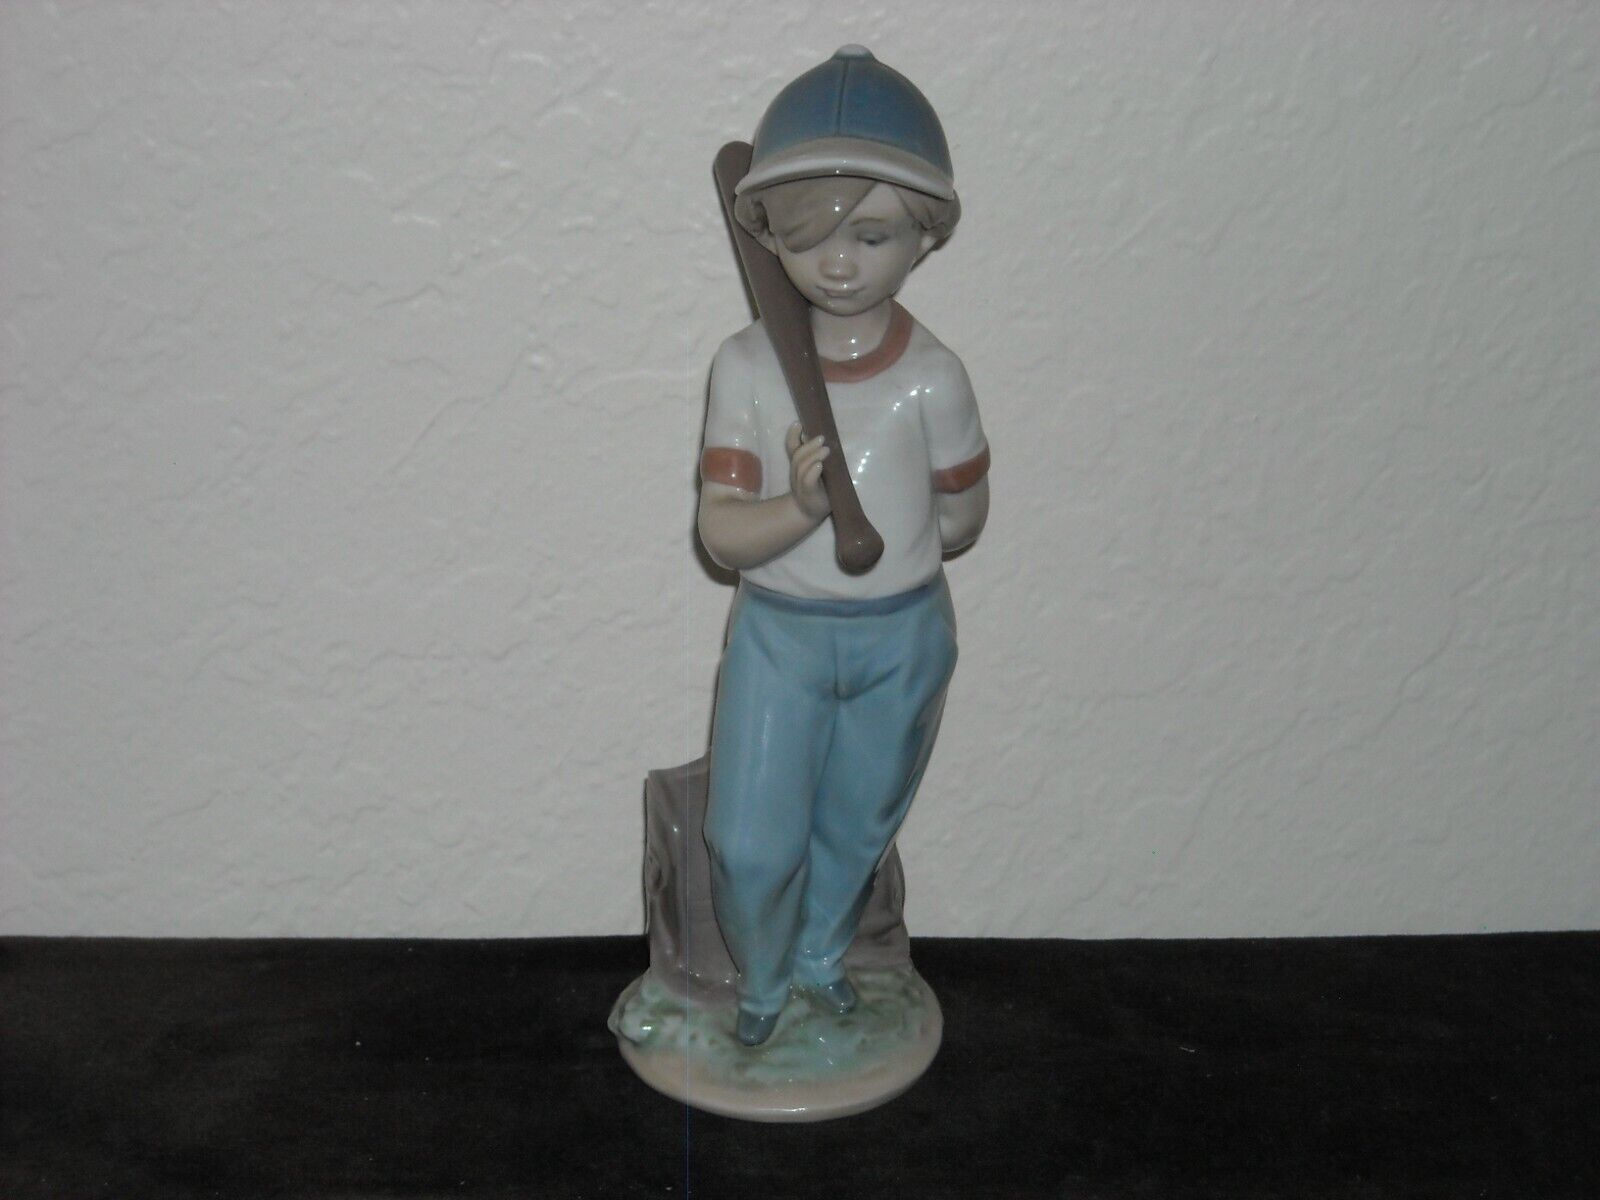 Lladro Figurine Can I Play #7610 Boy in Cap with Baseball Bat